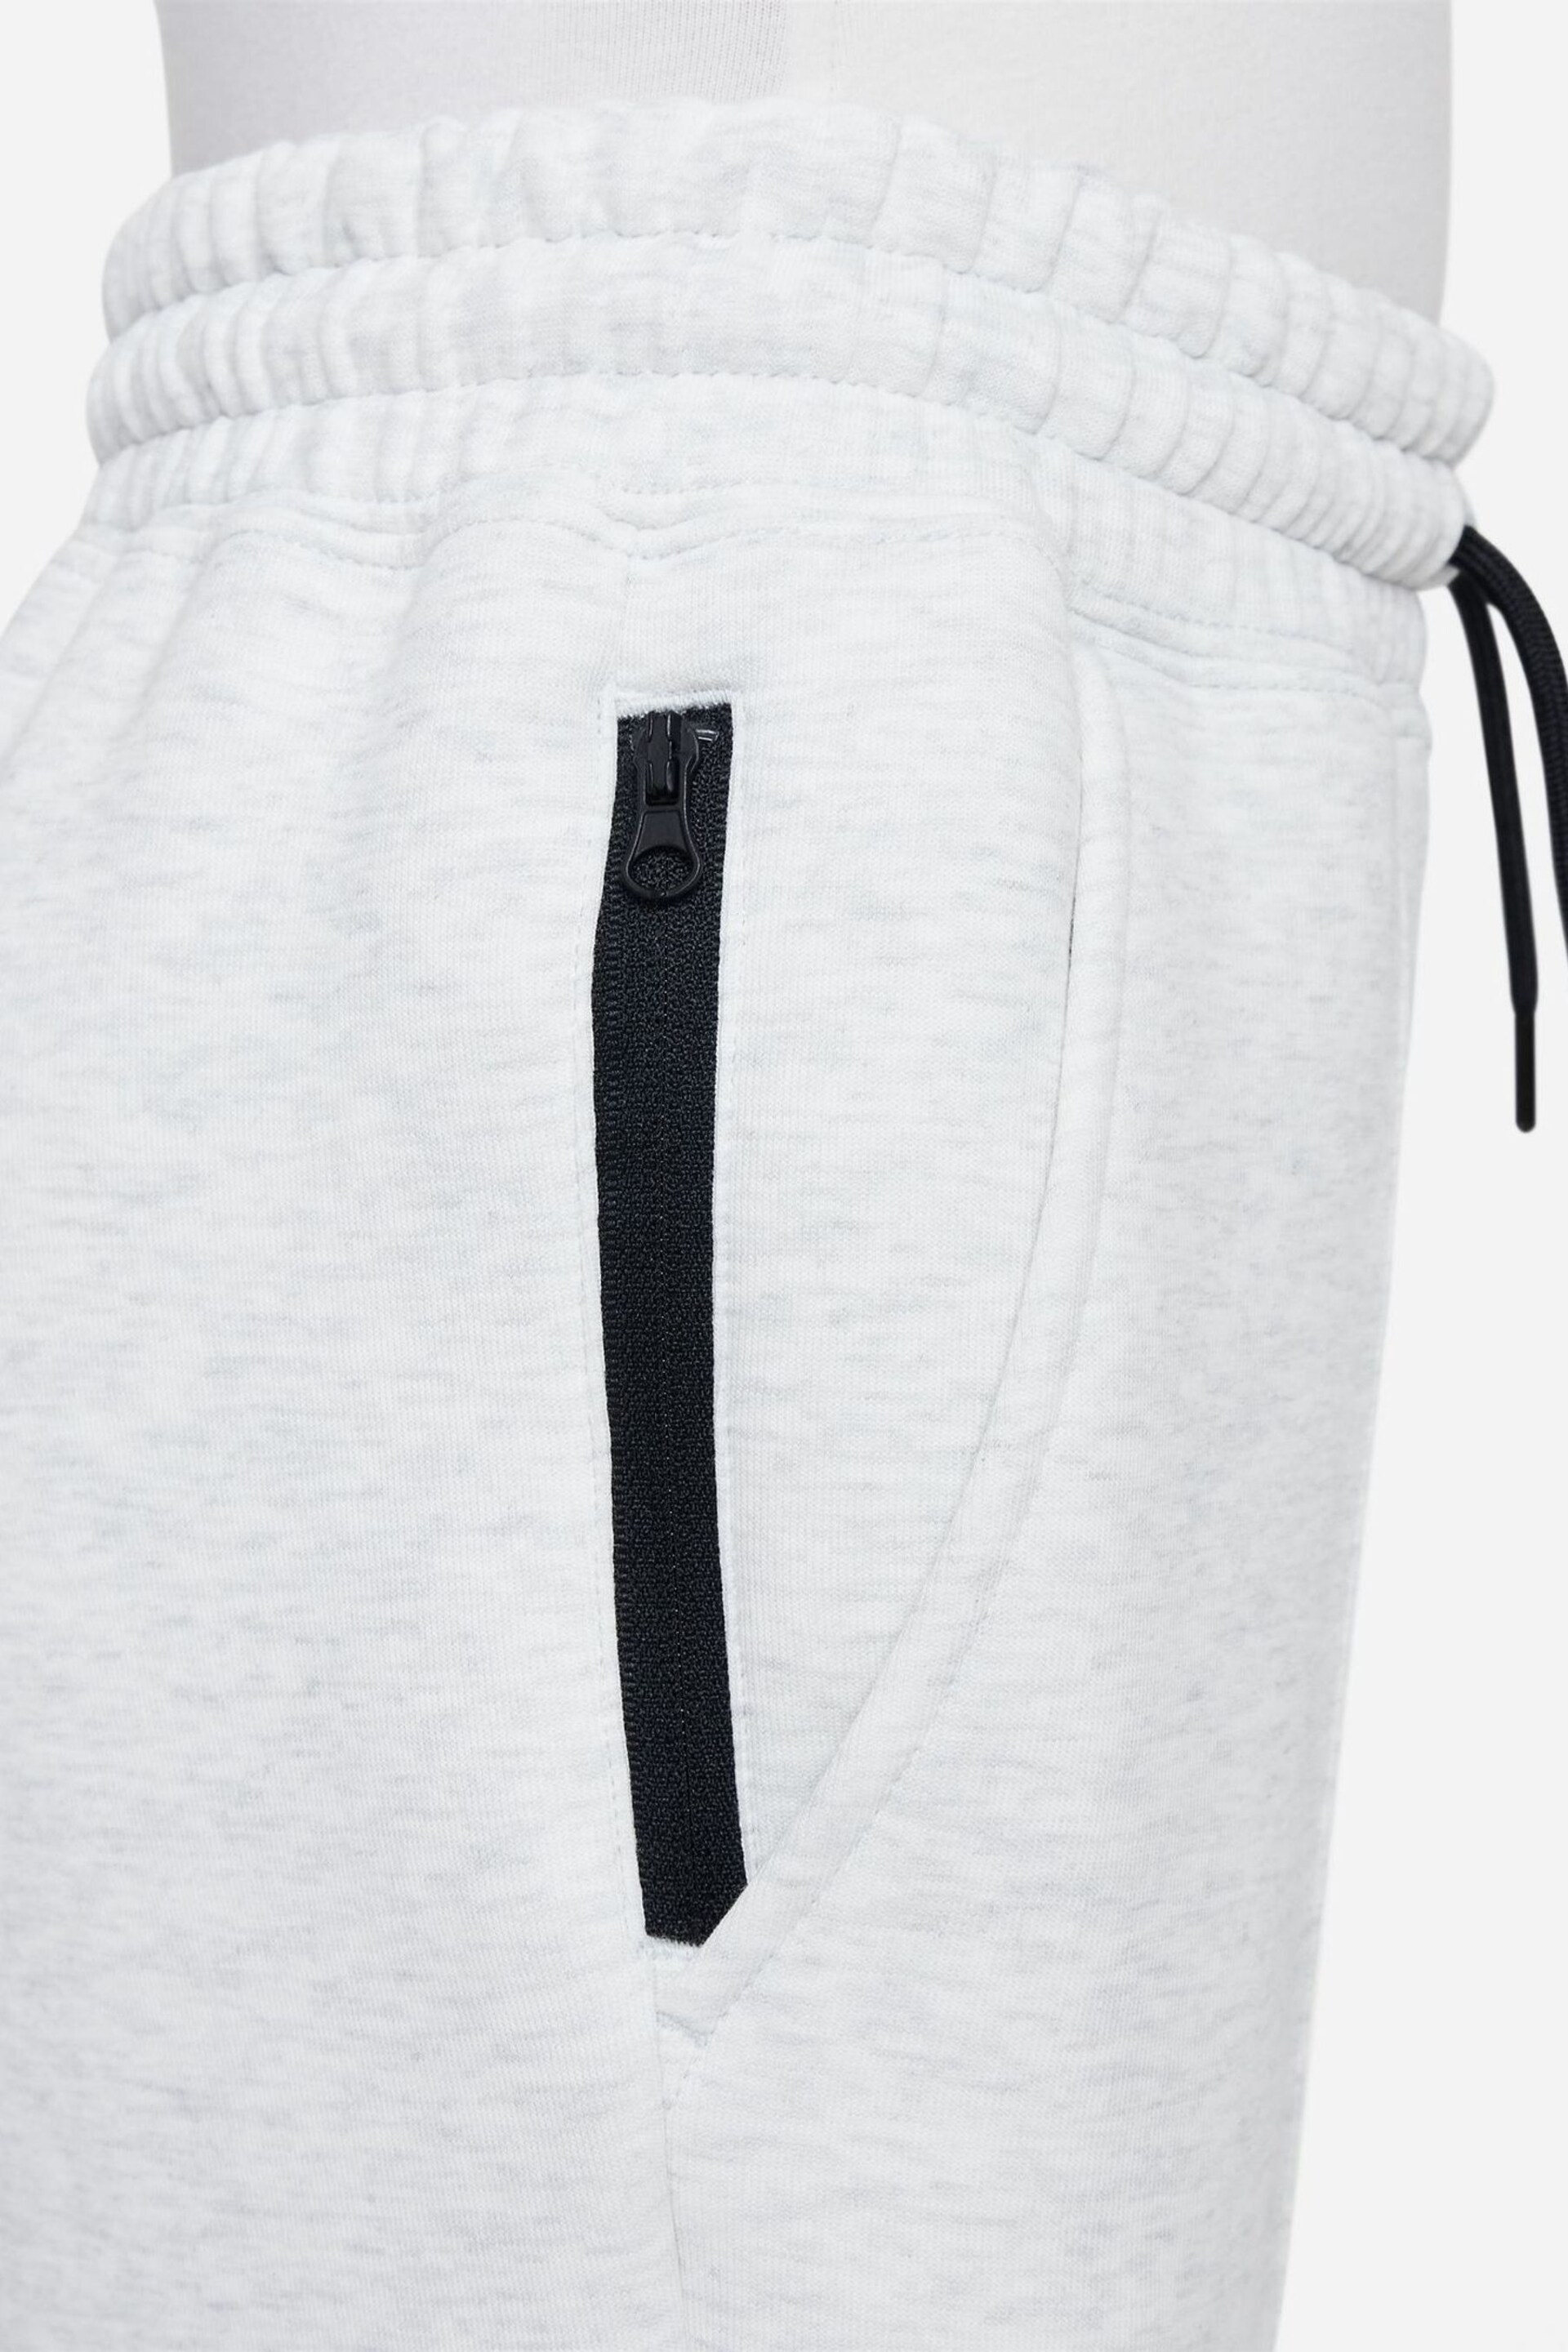 Nike Dark Grey Tech Fleece Joggers - Image 5 of 7